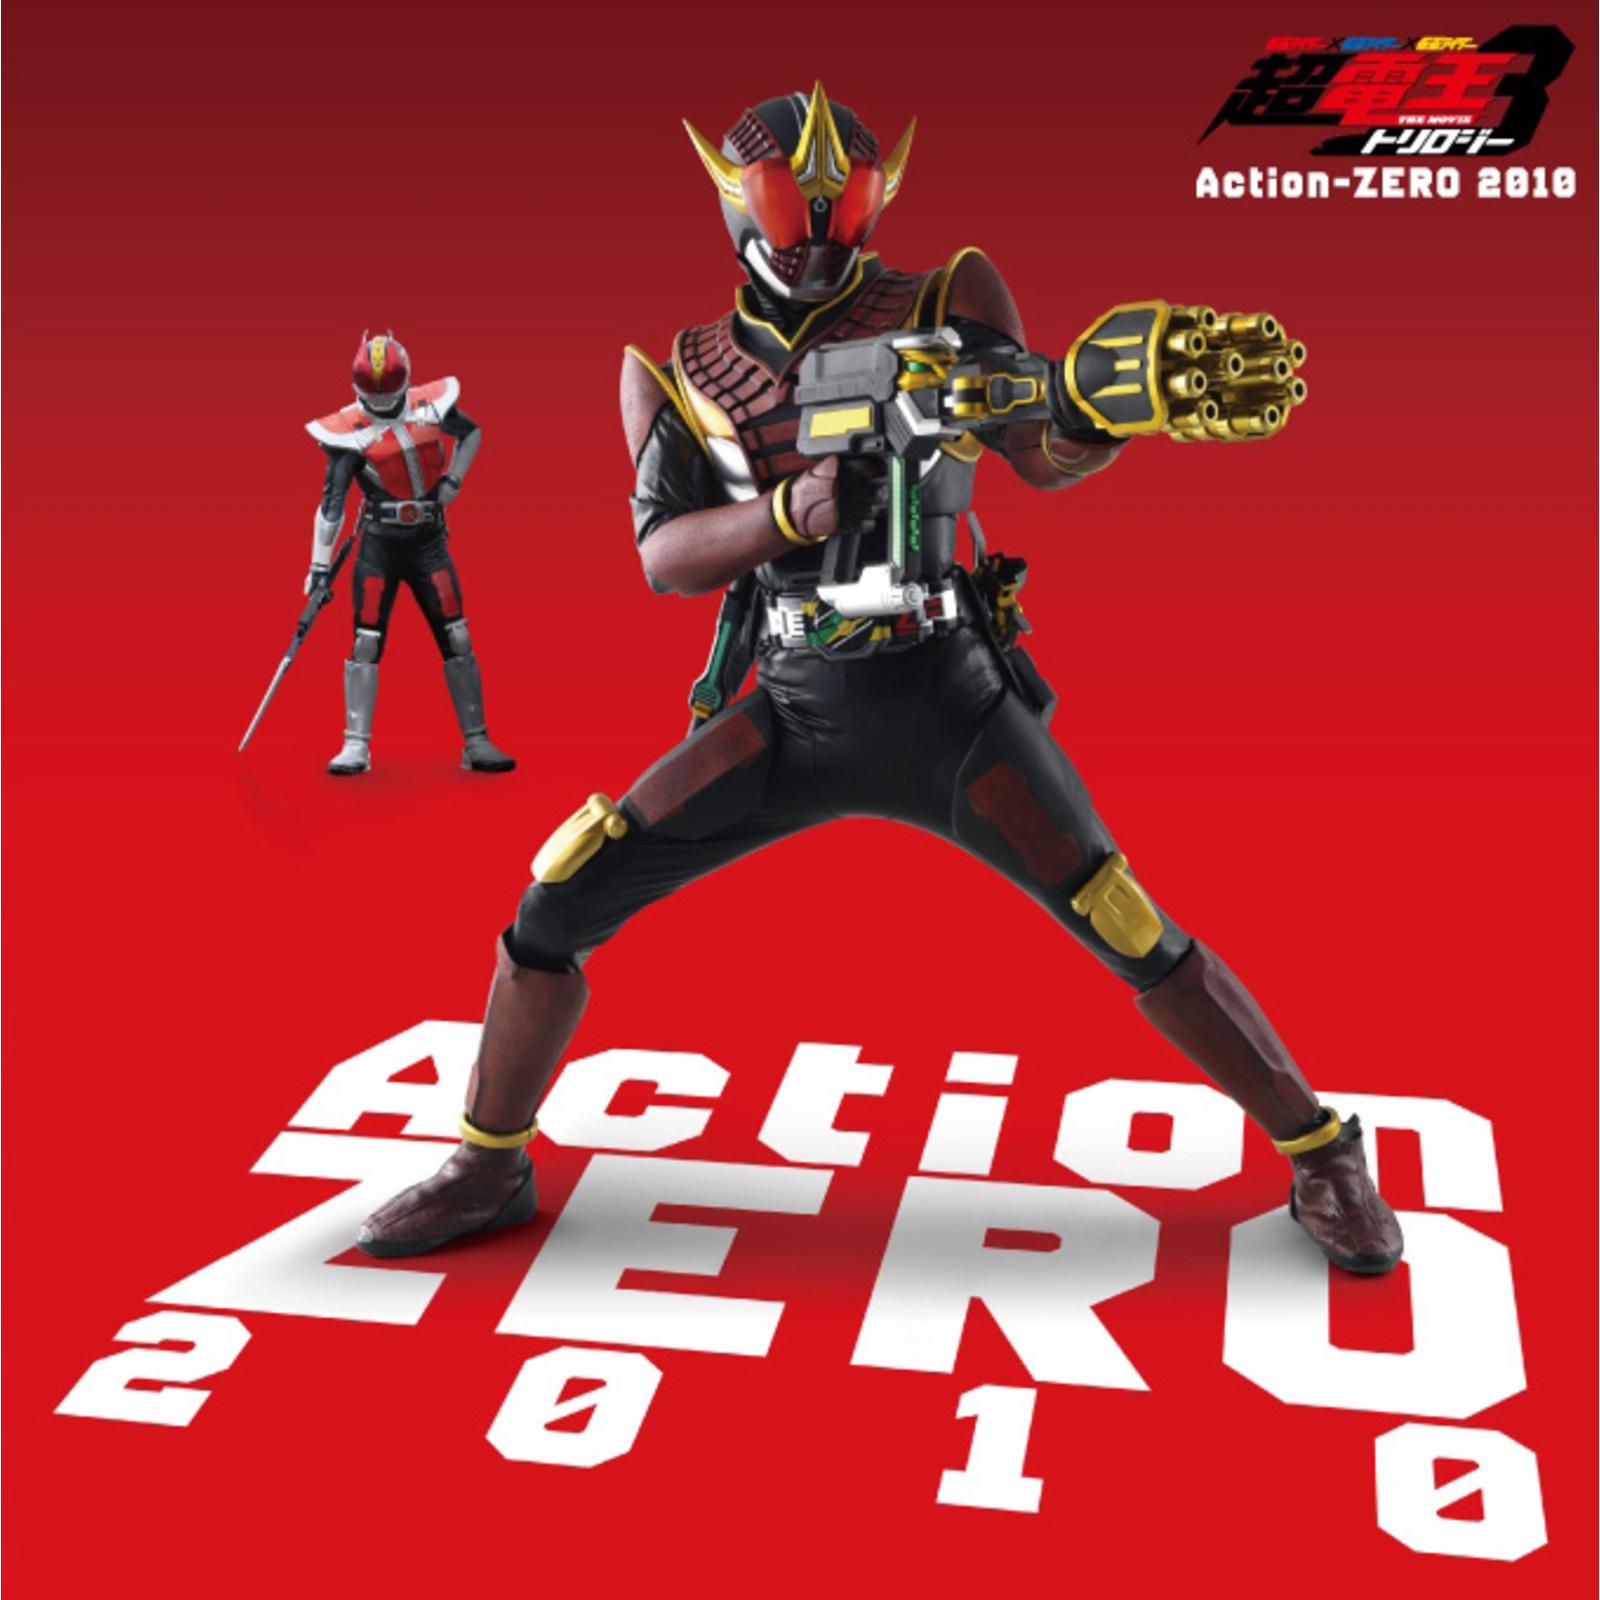 Action-ZERO 2010 instrumental